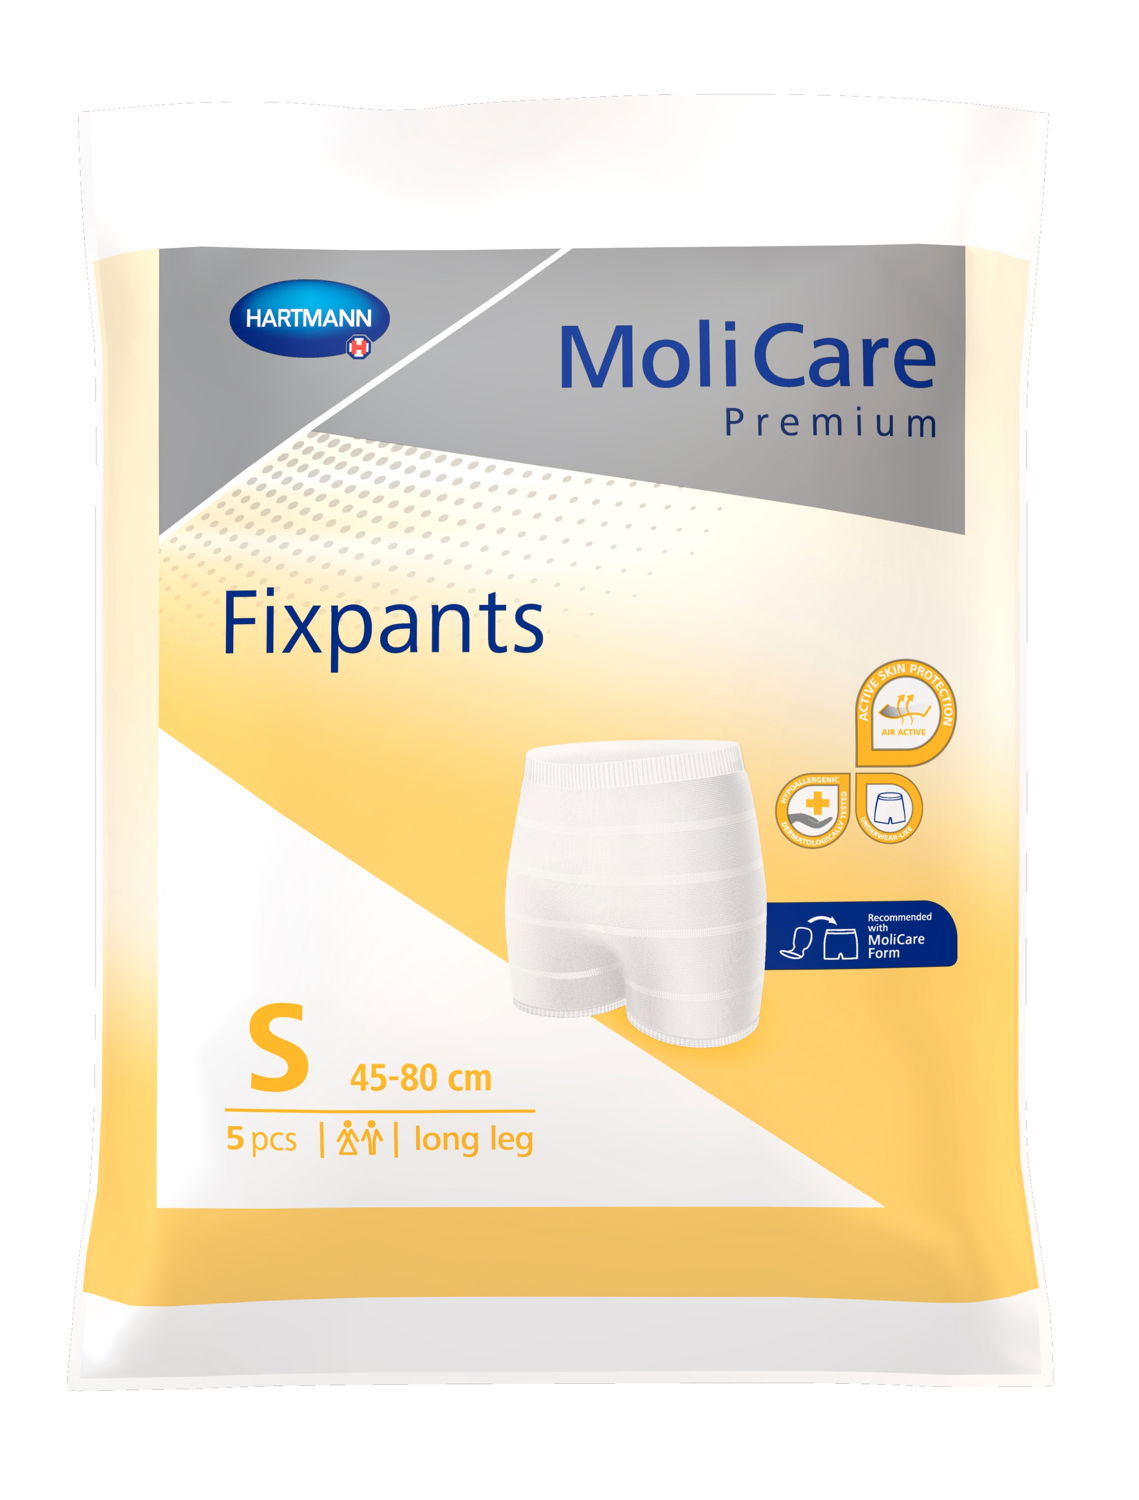 MoliCare Premium Fixpants - S